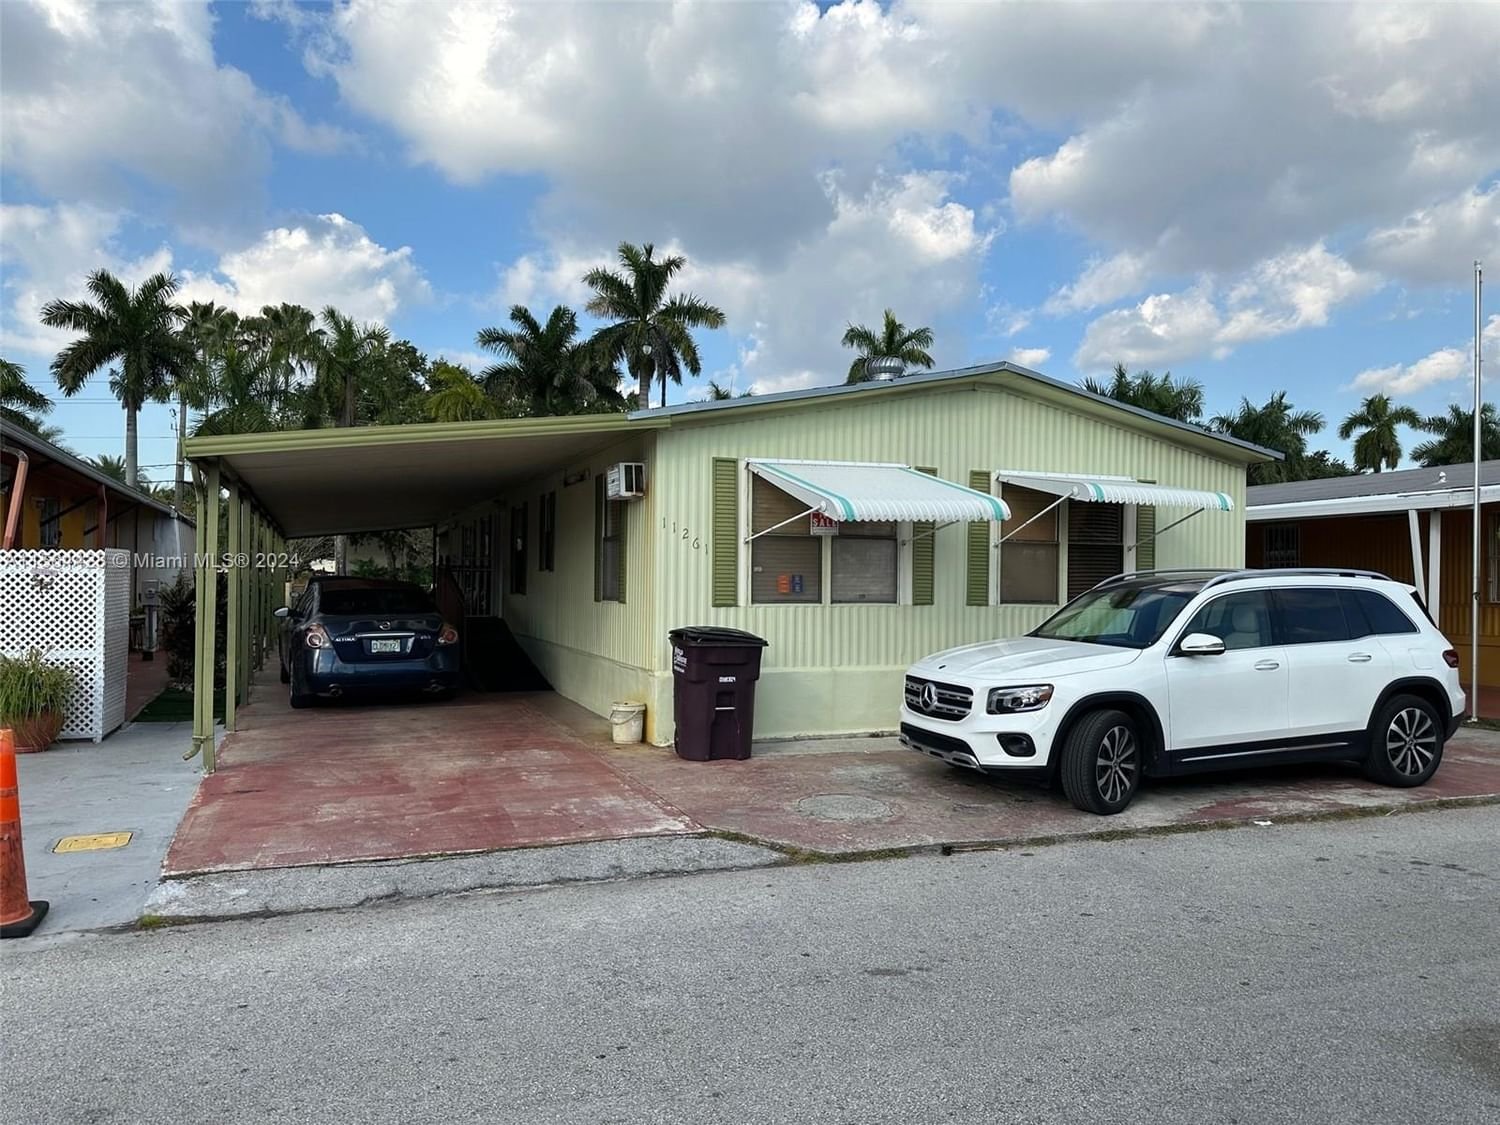 Real estate property located at 11261 6 Ter, Miami-Dade County, LI'L ABNER MOBIL HOME PARK, Miami, FL